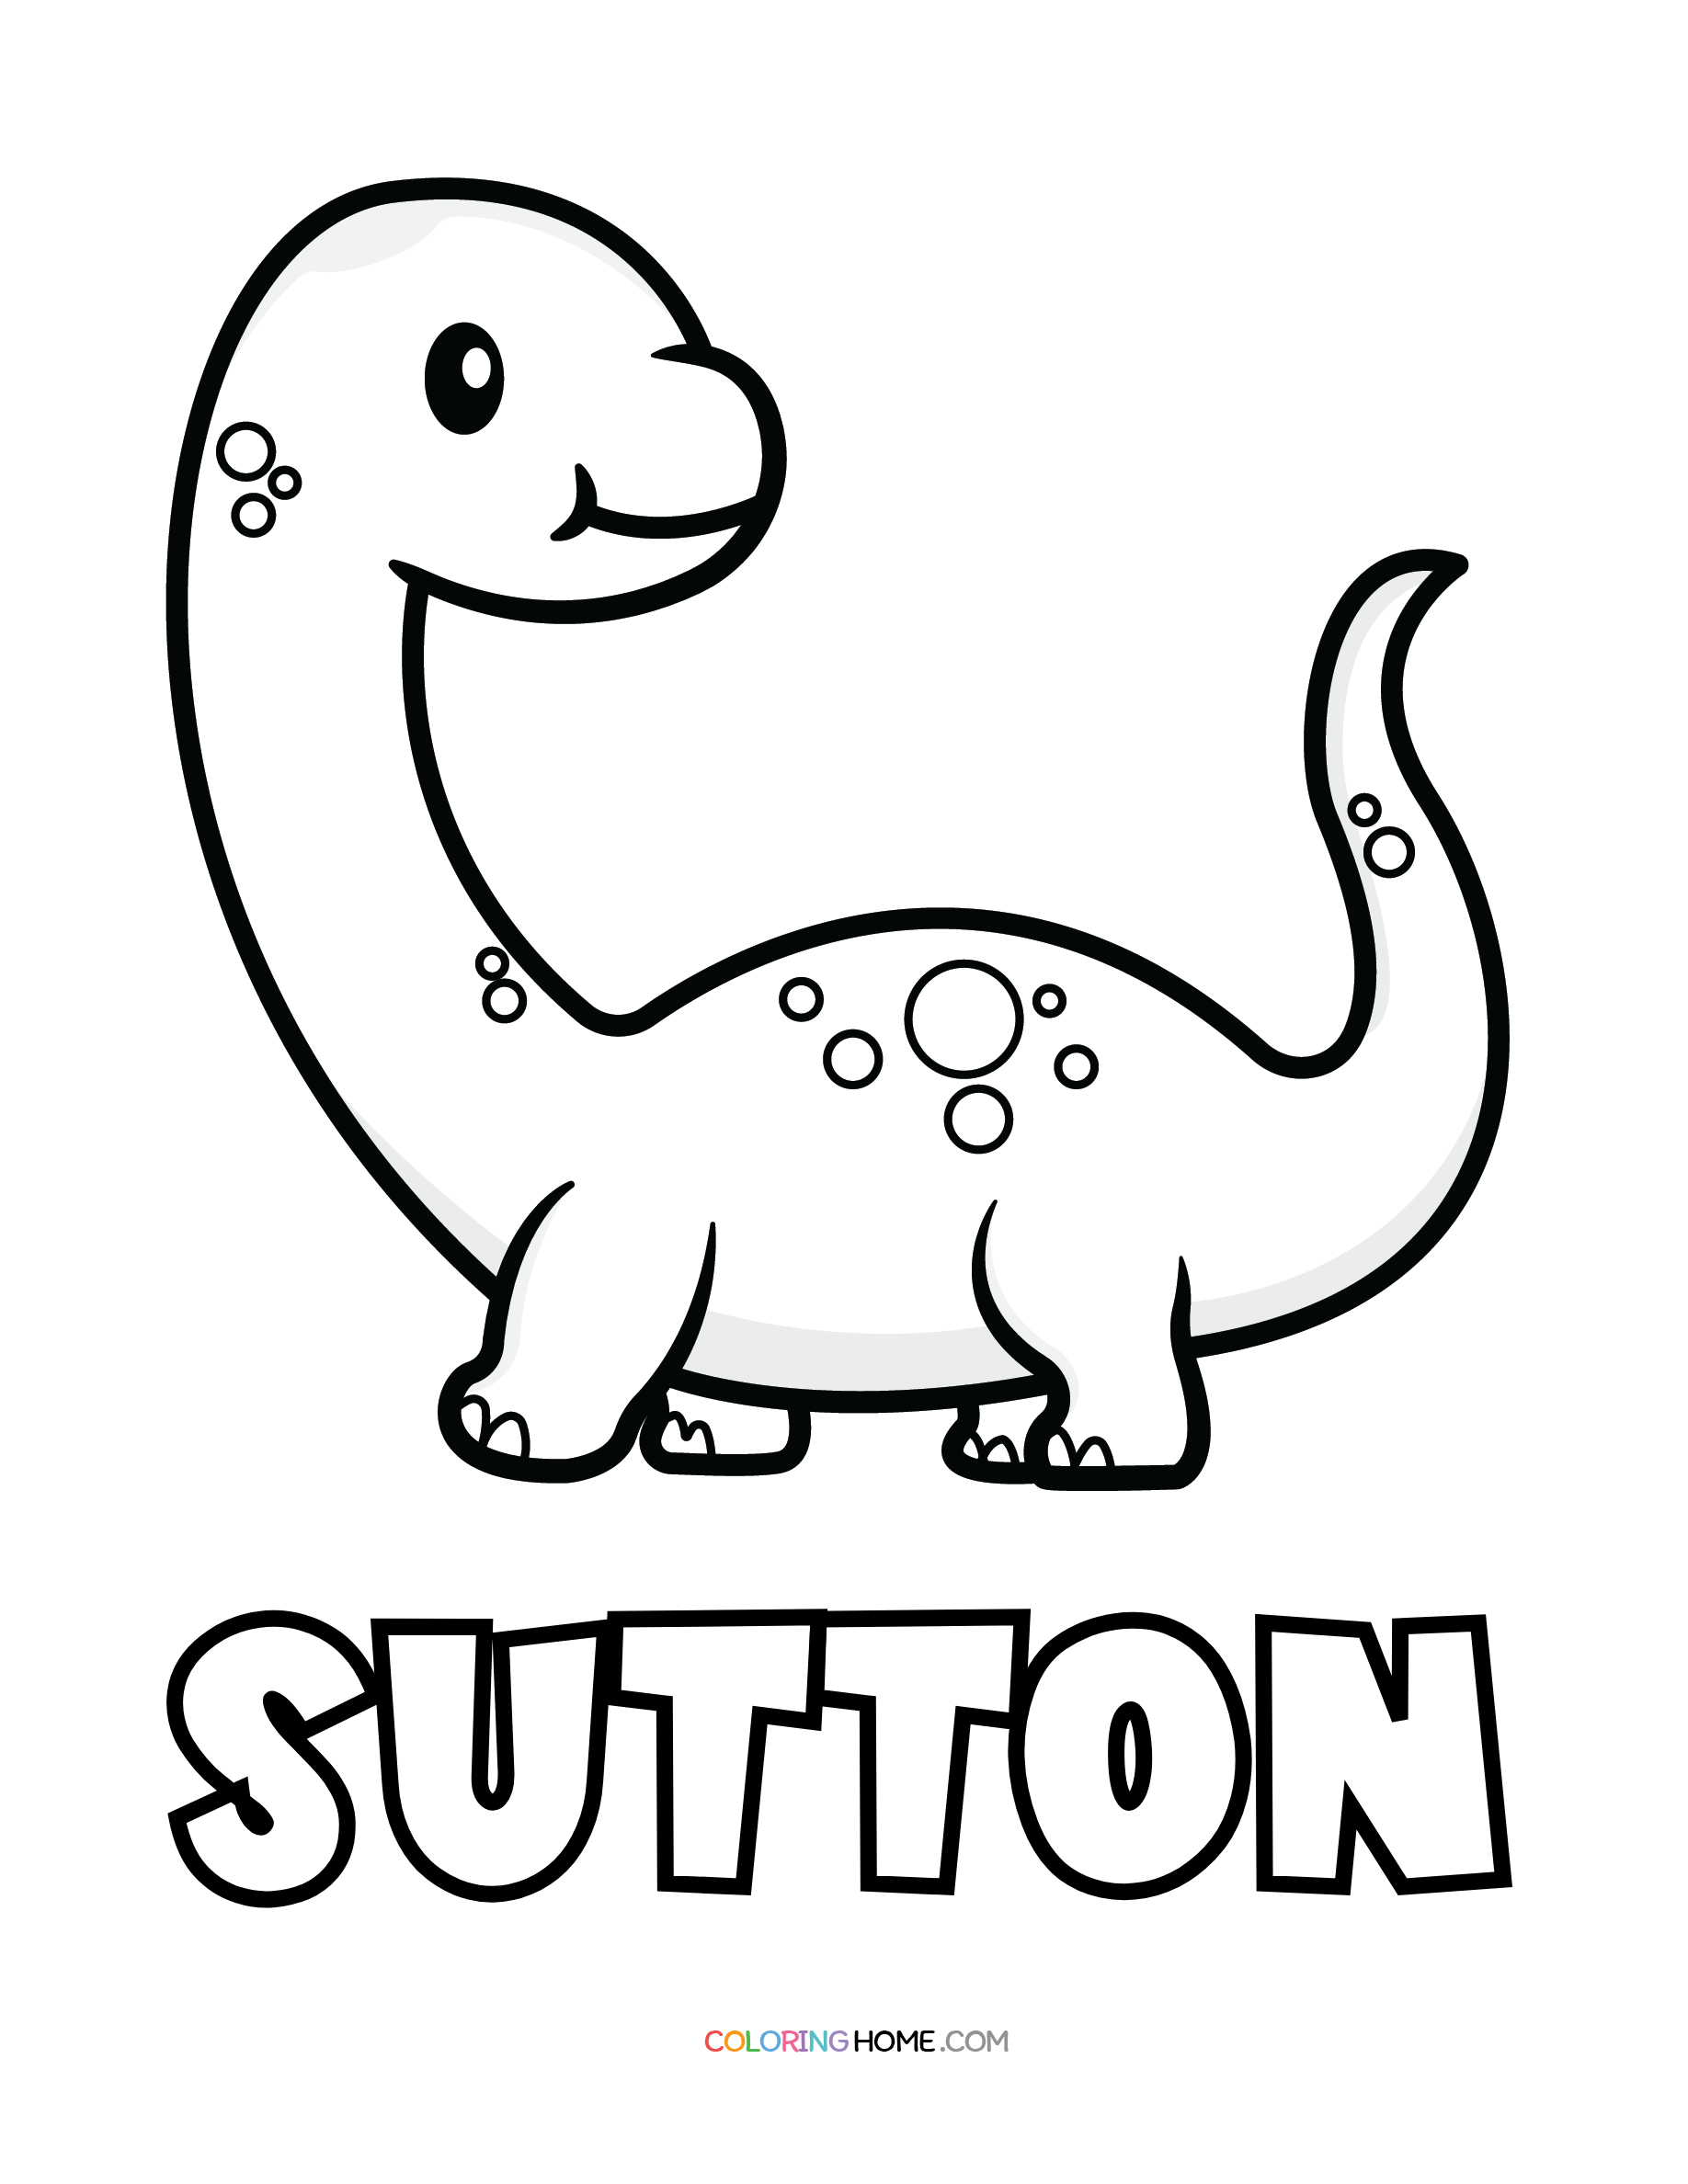 Sutton dinosaur coloring page